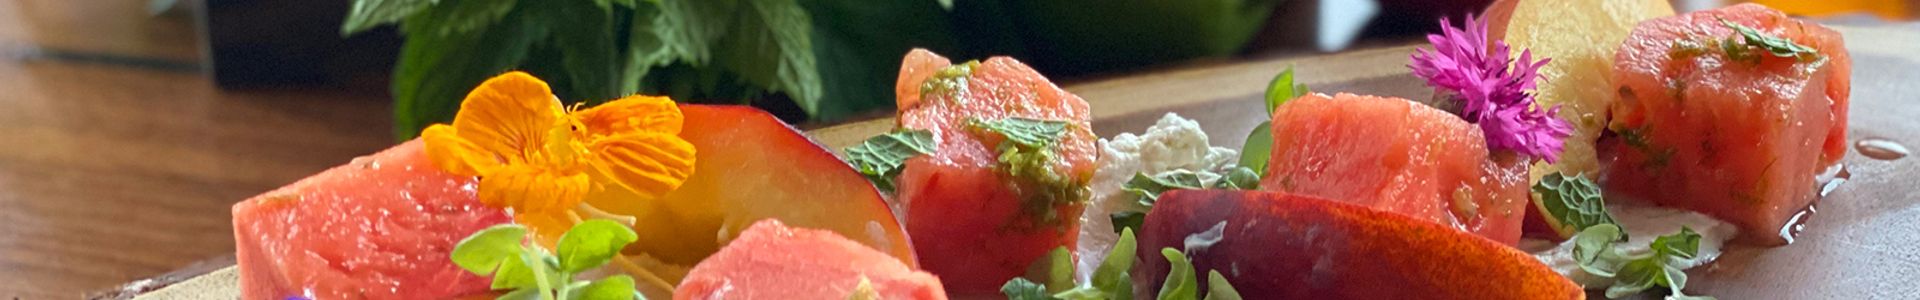  Watermelon and Nectarine Salad